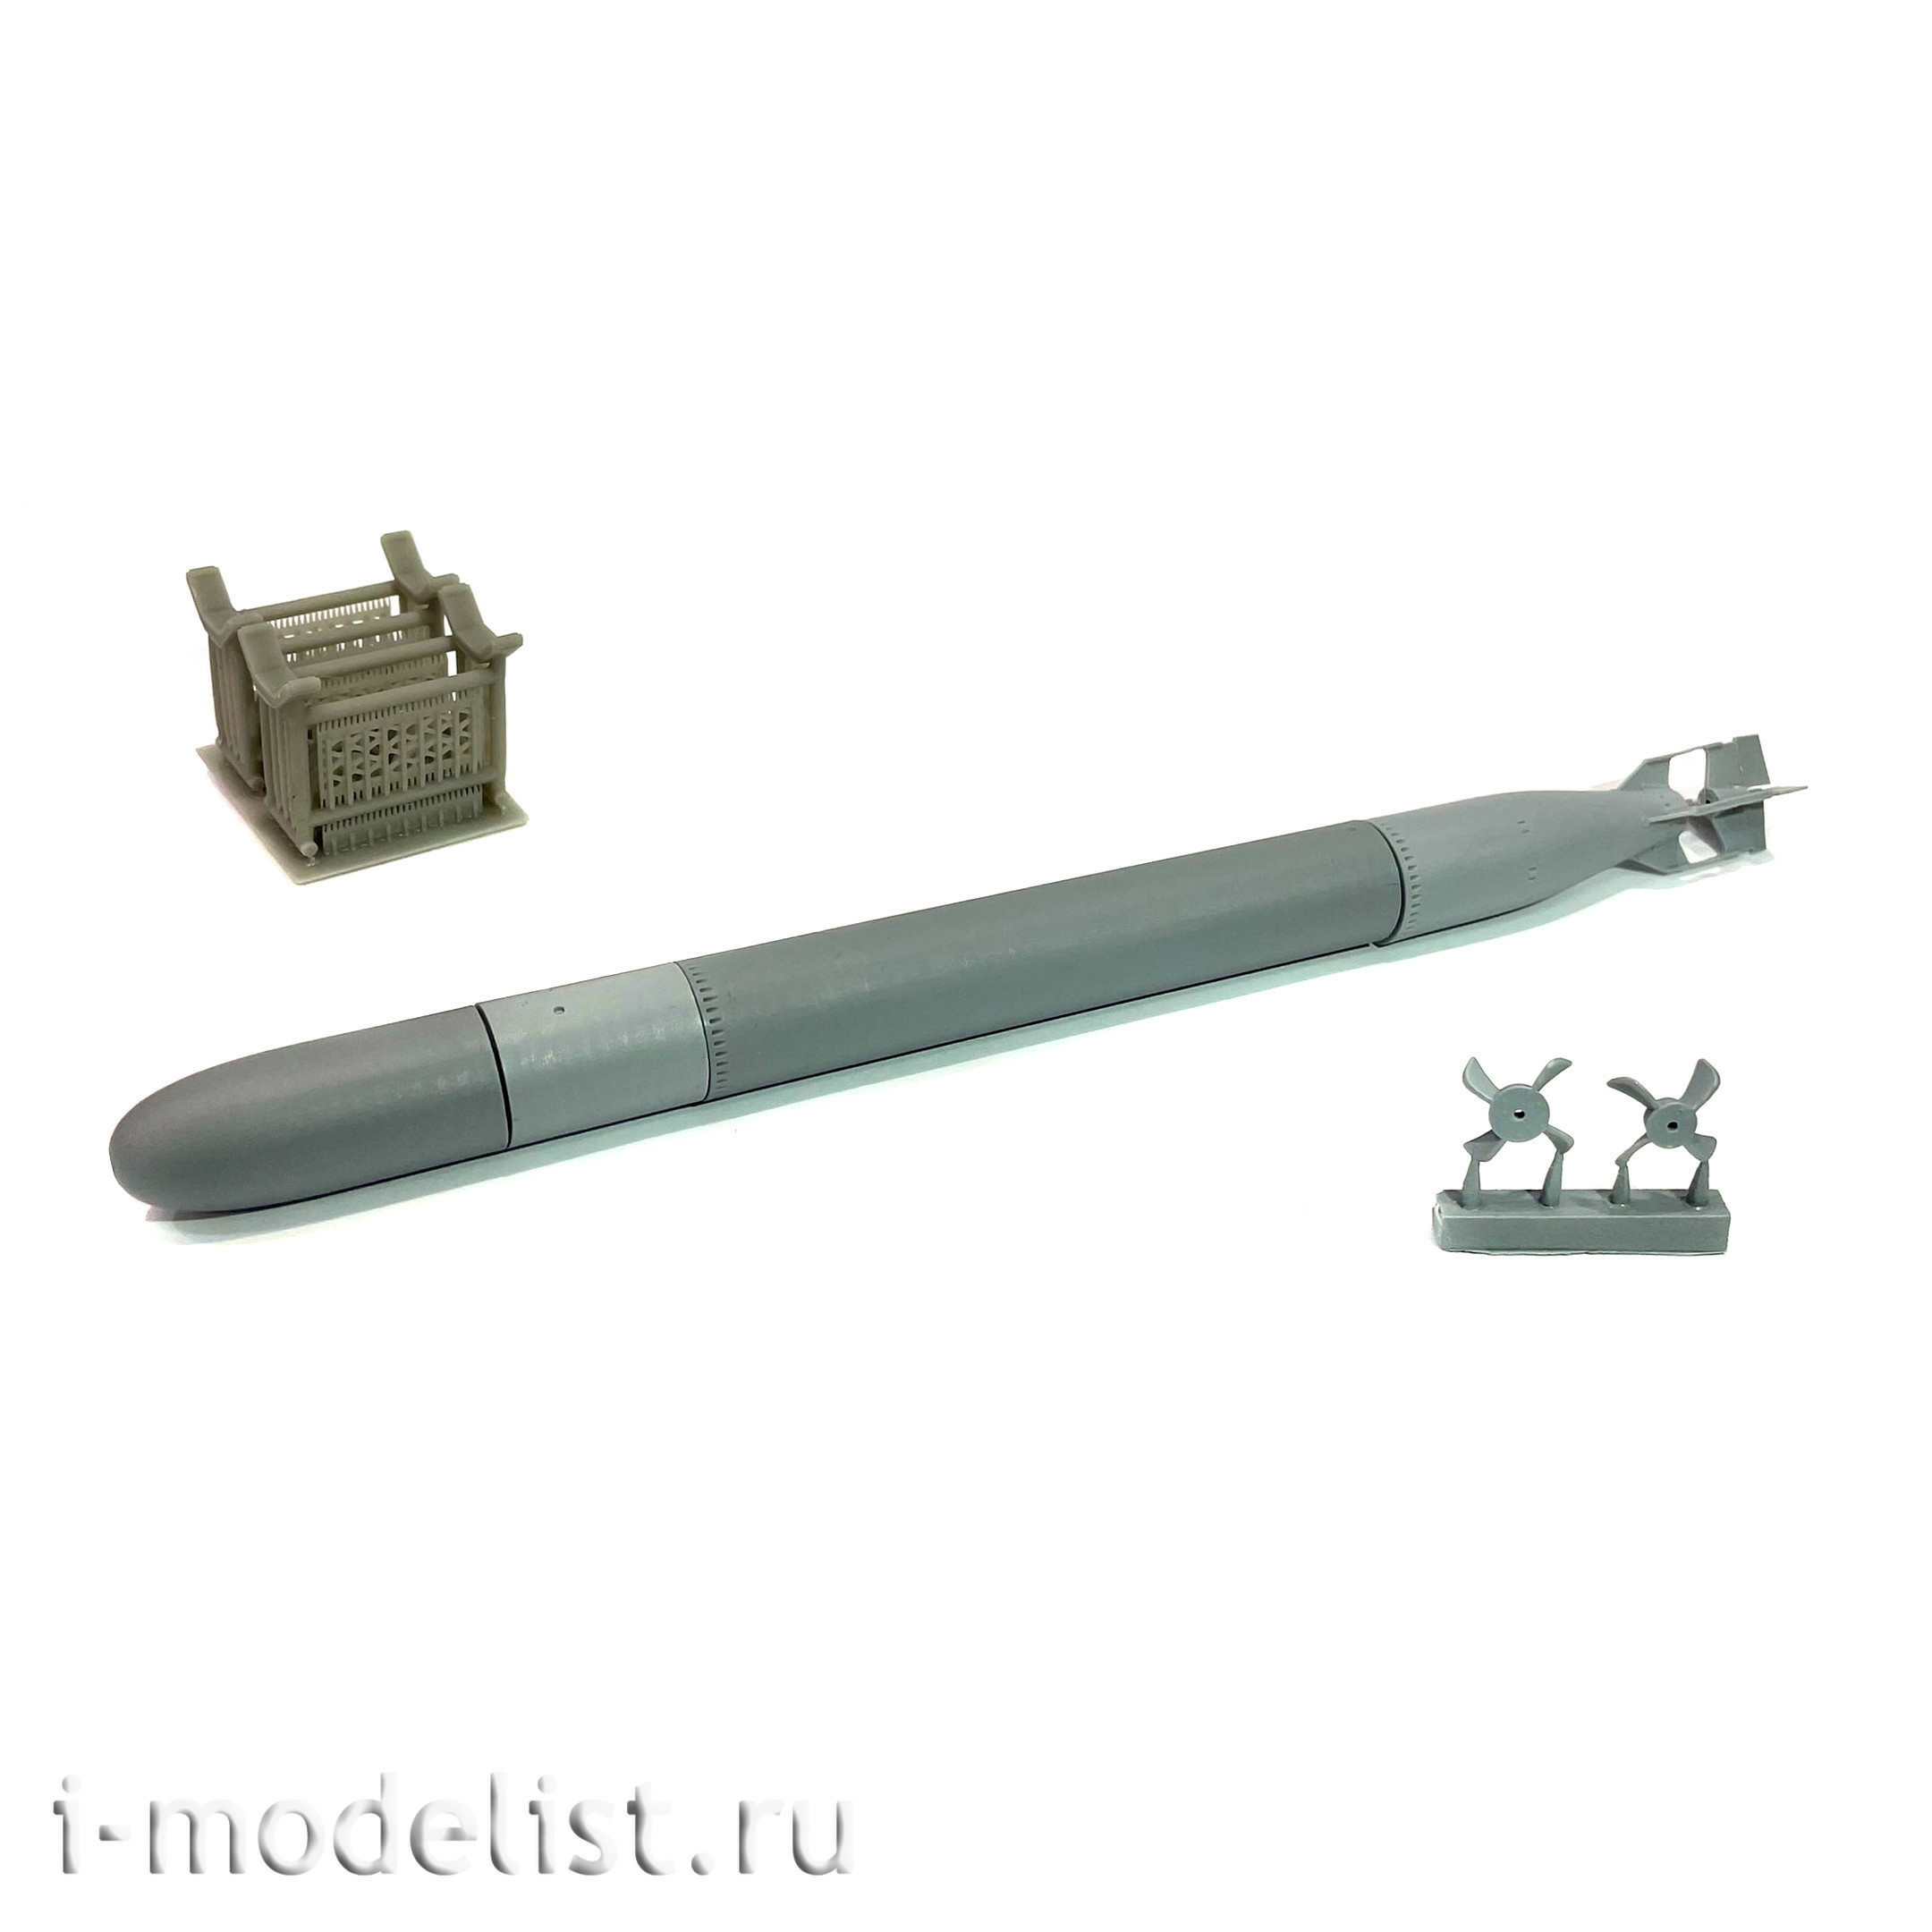 im35019 Imodelist 1/35 Soviet torpedo 53-38, caliber 533, on a trolley